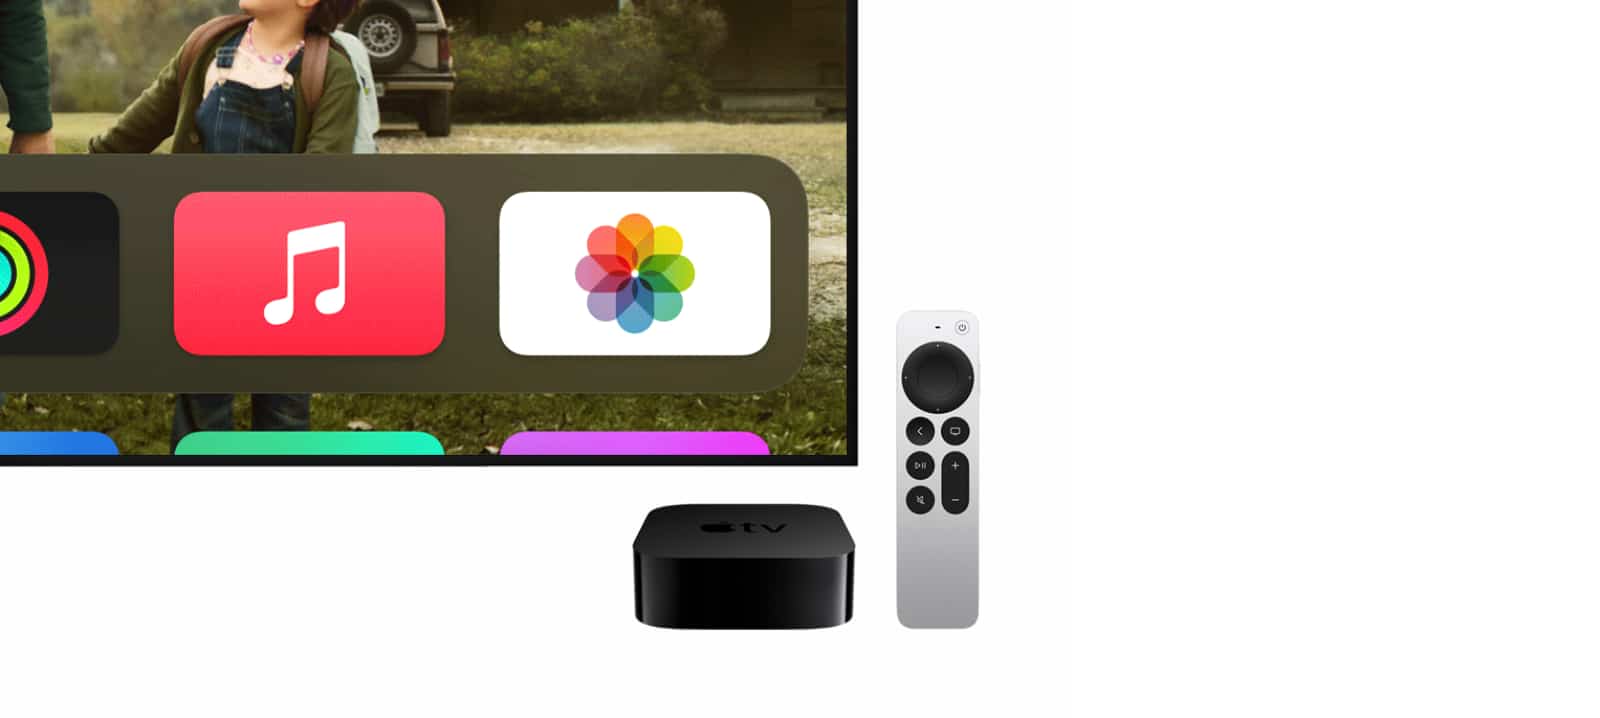 2021's Apple TV 4K boosts colour, performance – Pickr